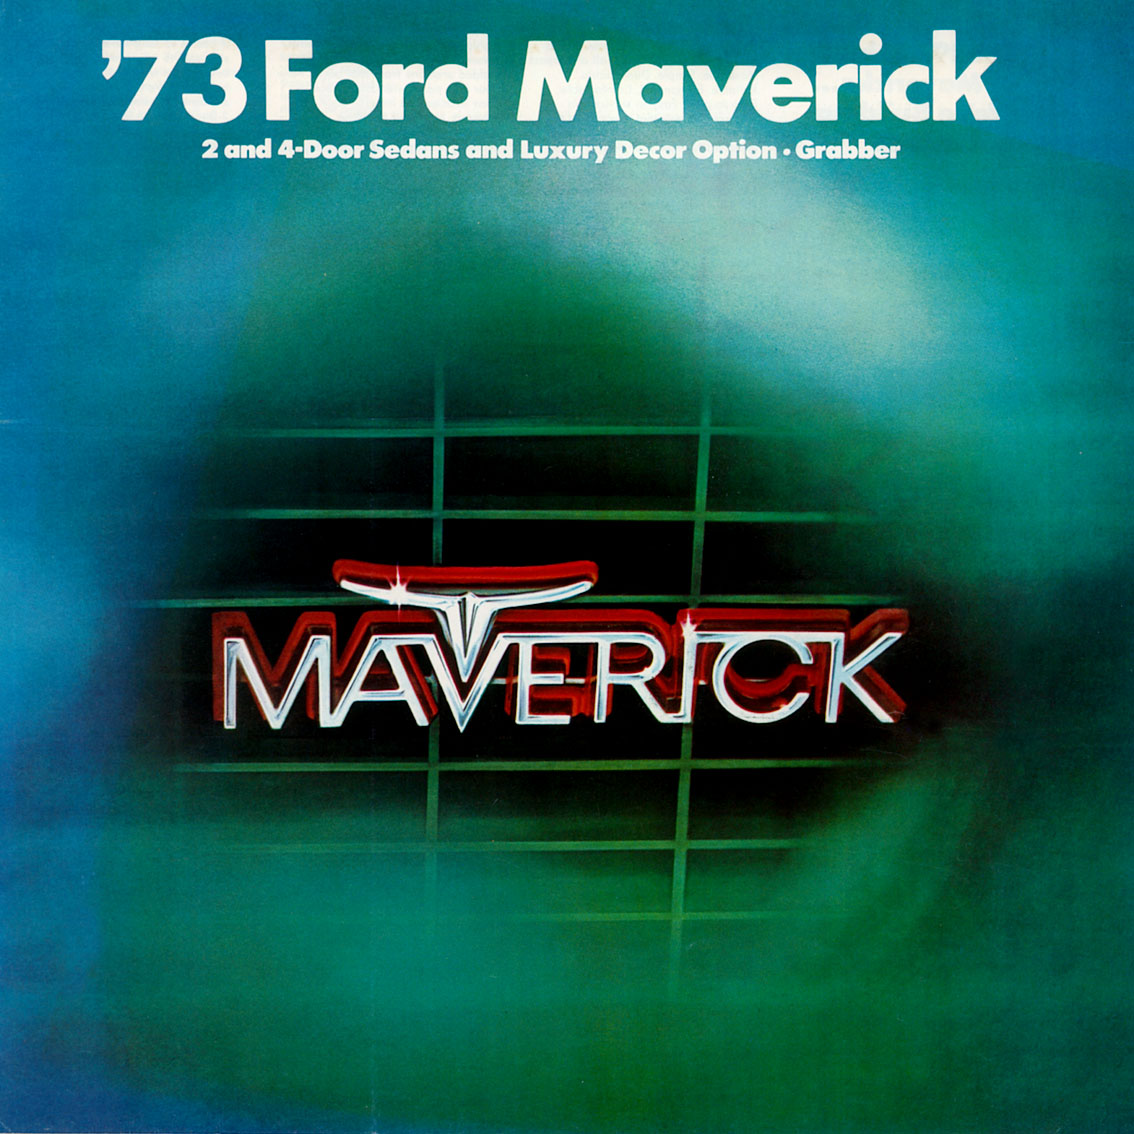 1973 Ford Maverick Brochure